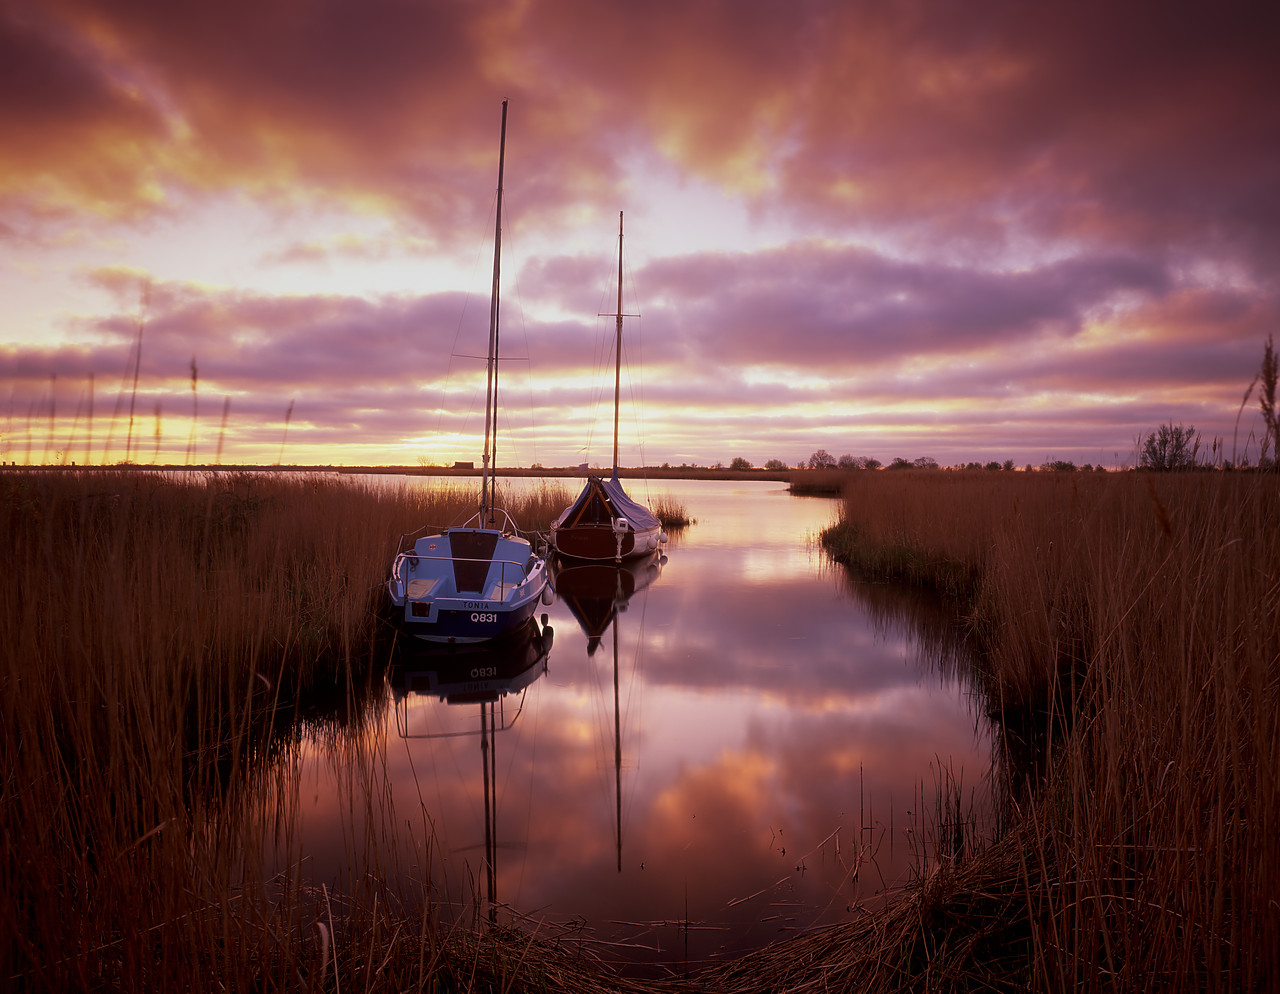 #970169-1 - Sailboats at Sunset, Horsey Mere, Norfolk Broads National Park, Norfolk, England